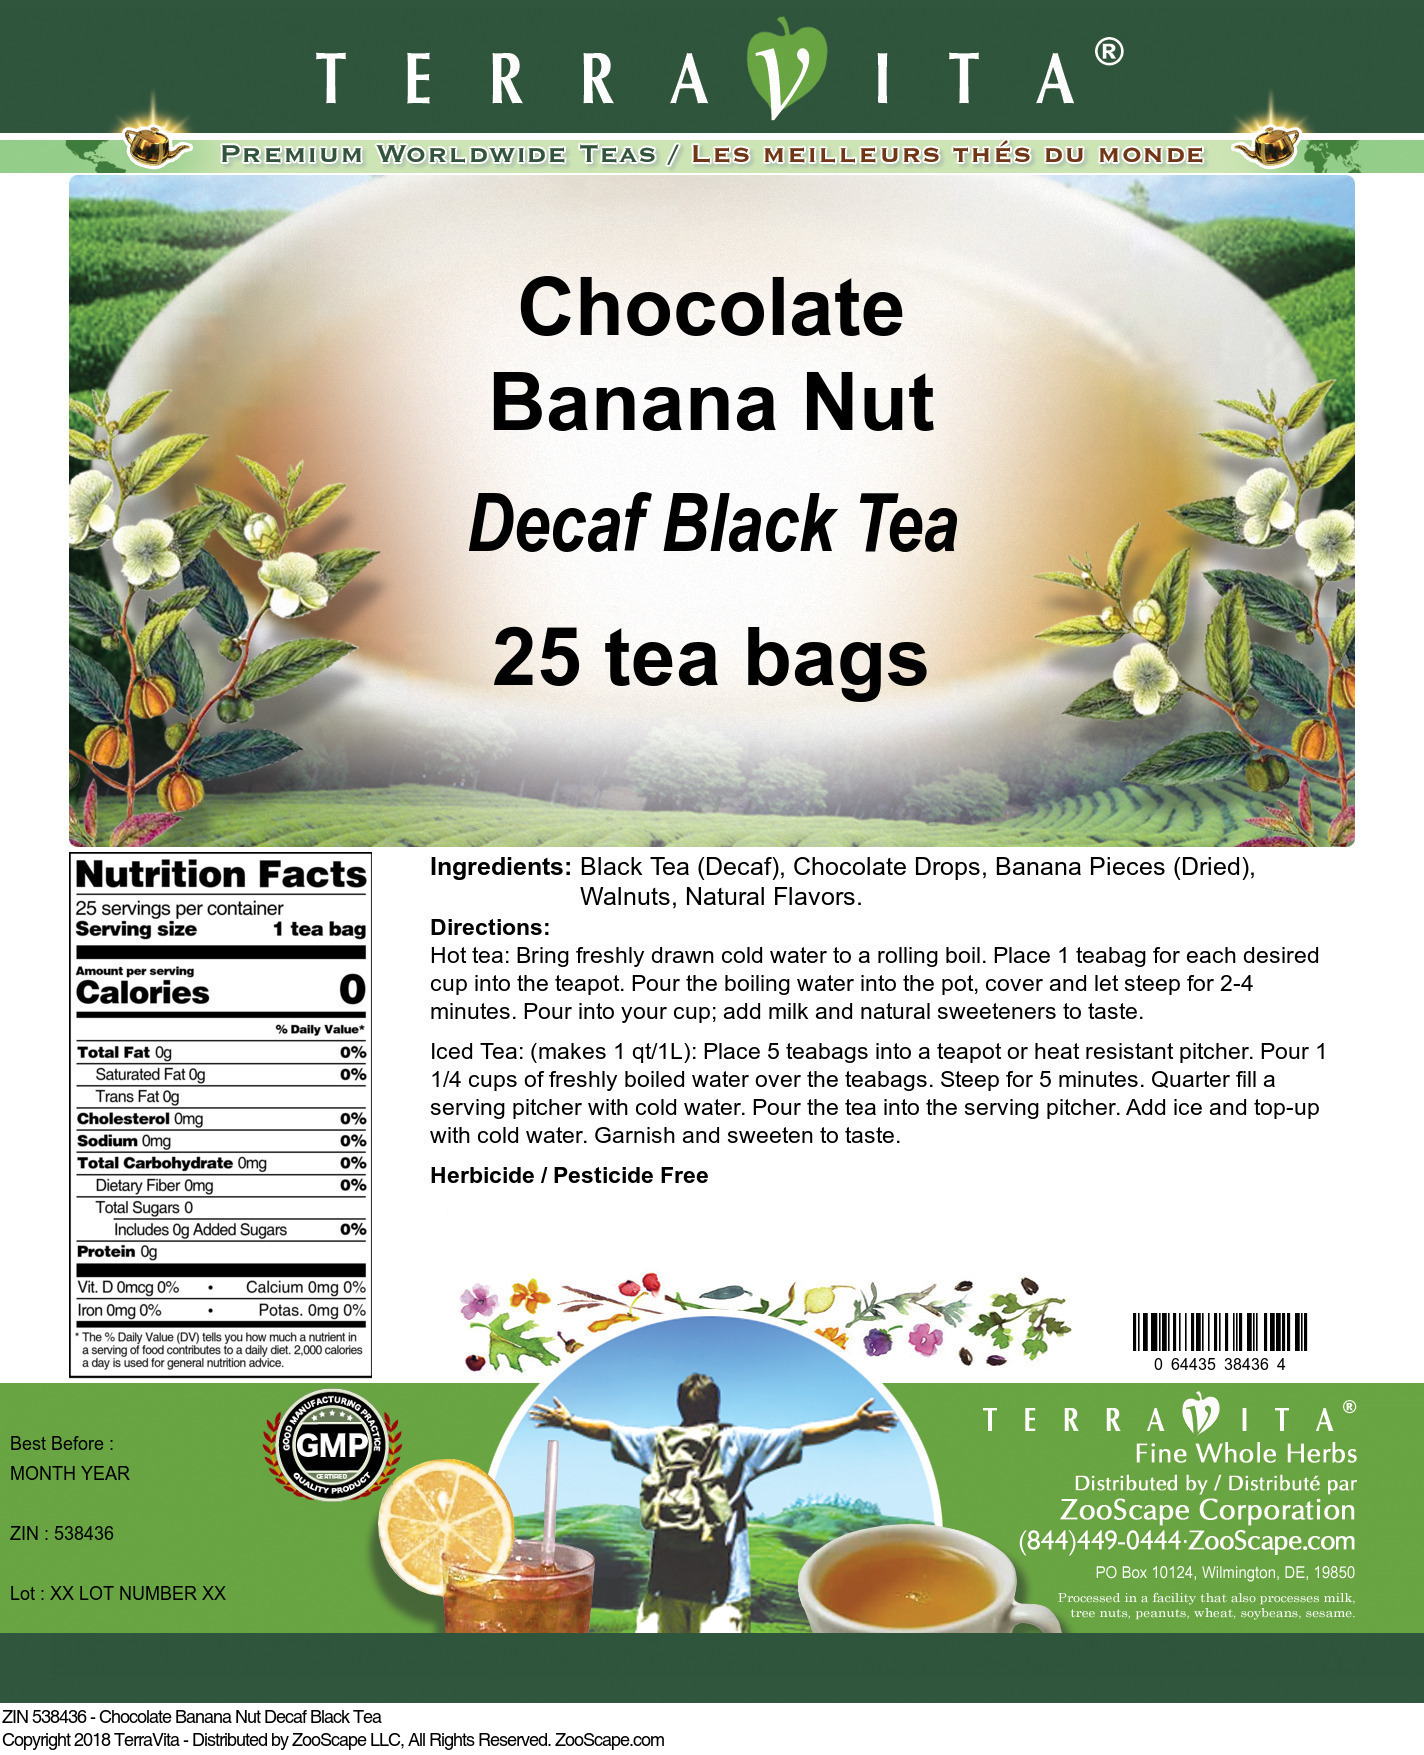 Chocolate Banana Nut Decaf Black Tea - Label